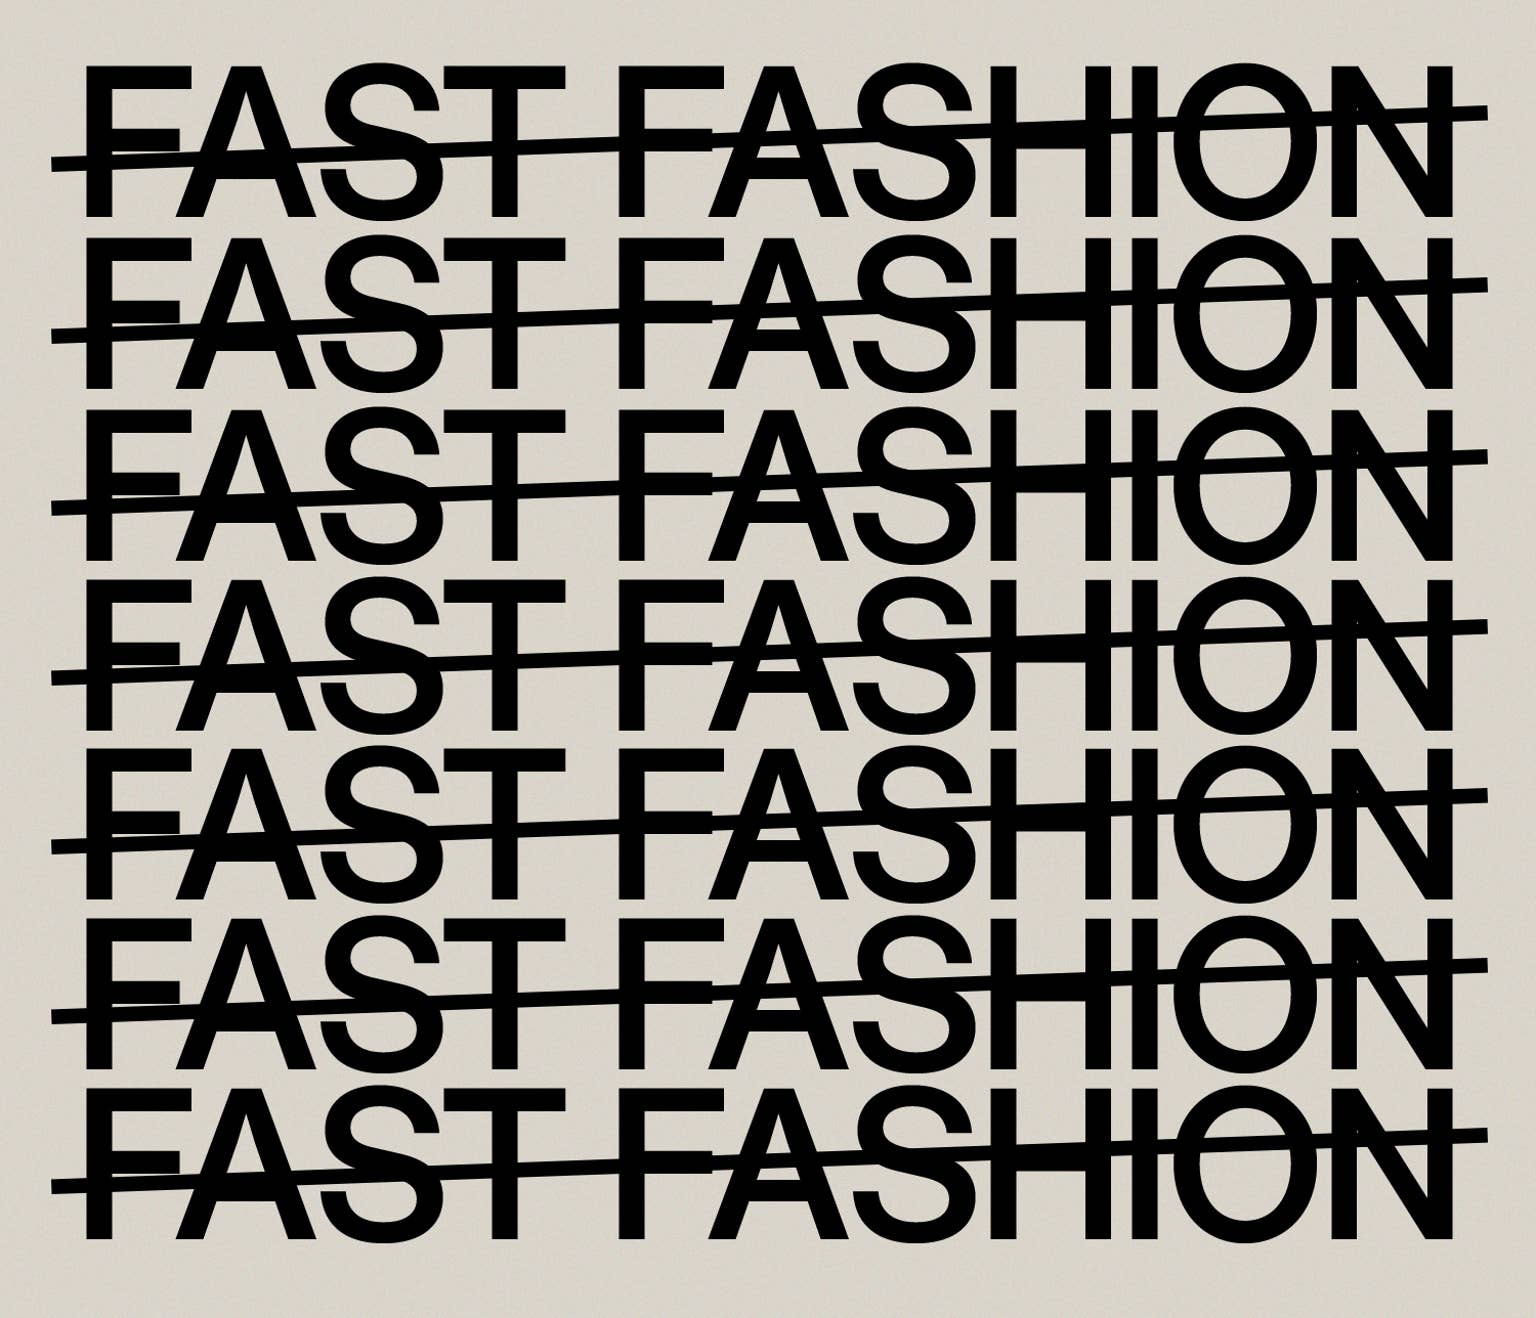 Vestiare Collective le dice no a las marcas fast fashion